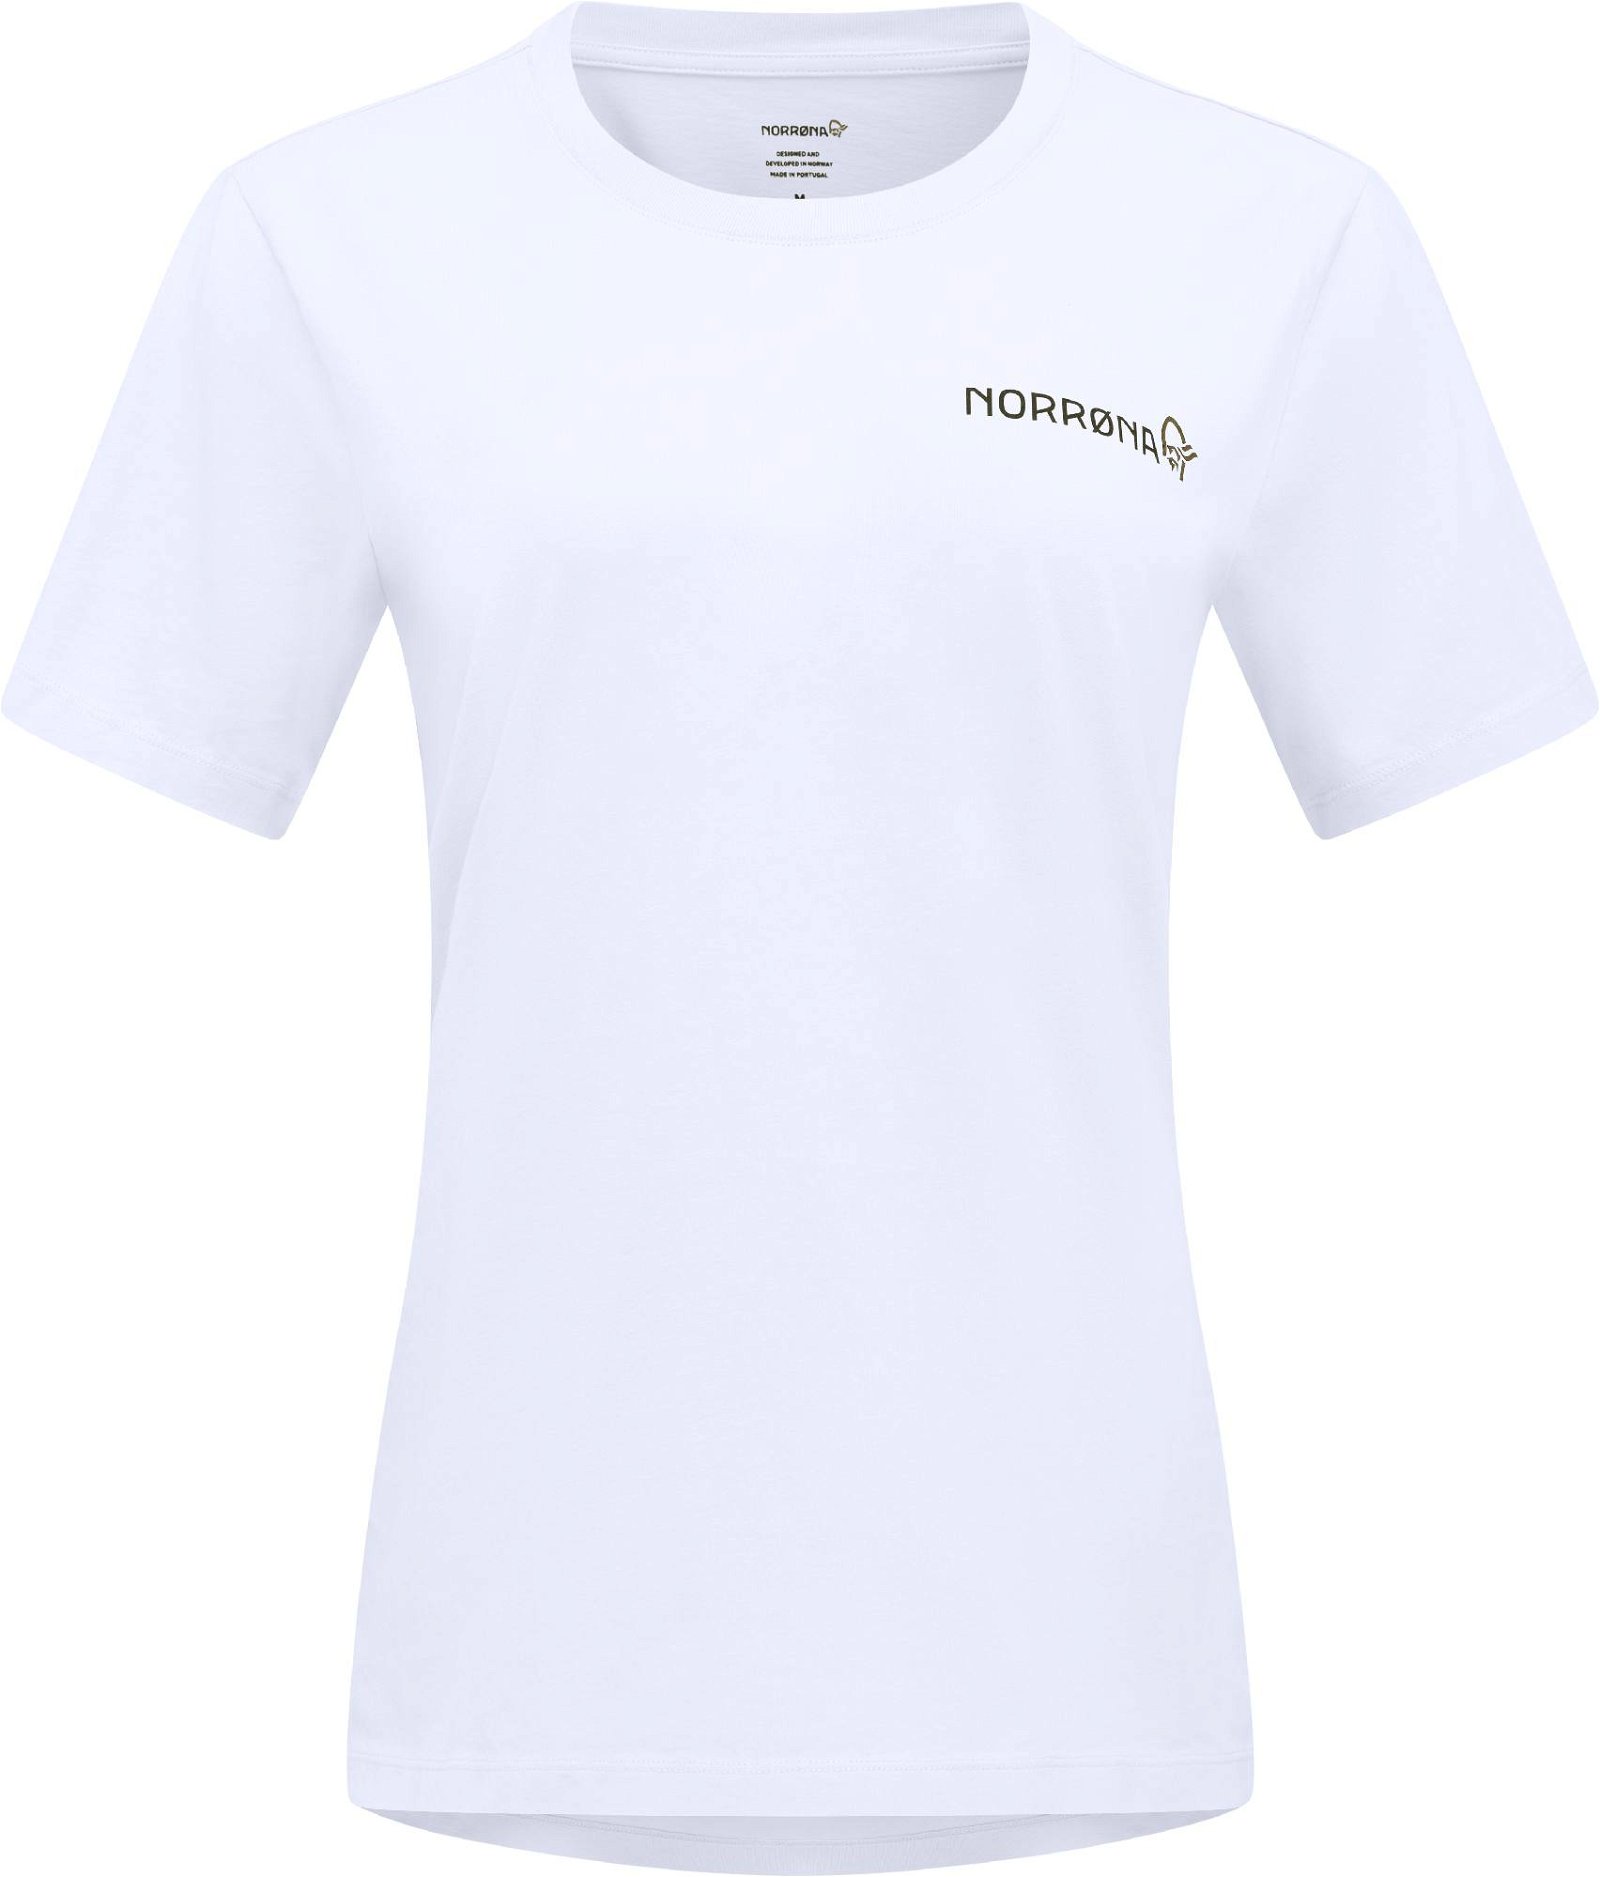 Bilde av Norrøna /29 Cotton Duotone T-shirt W'spure White M